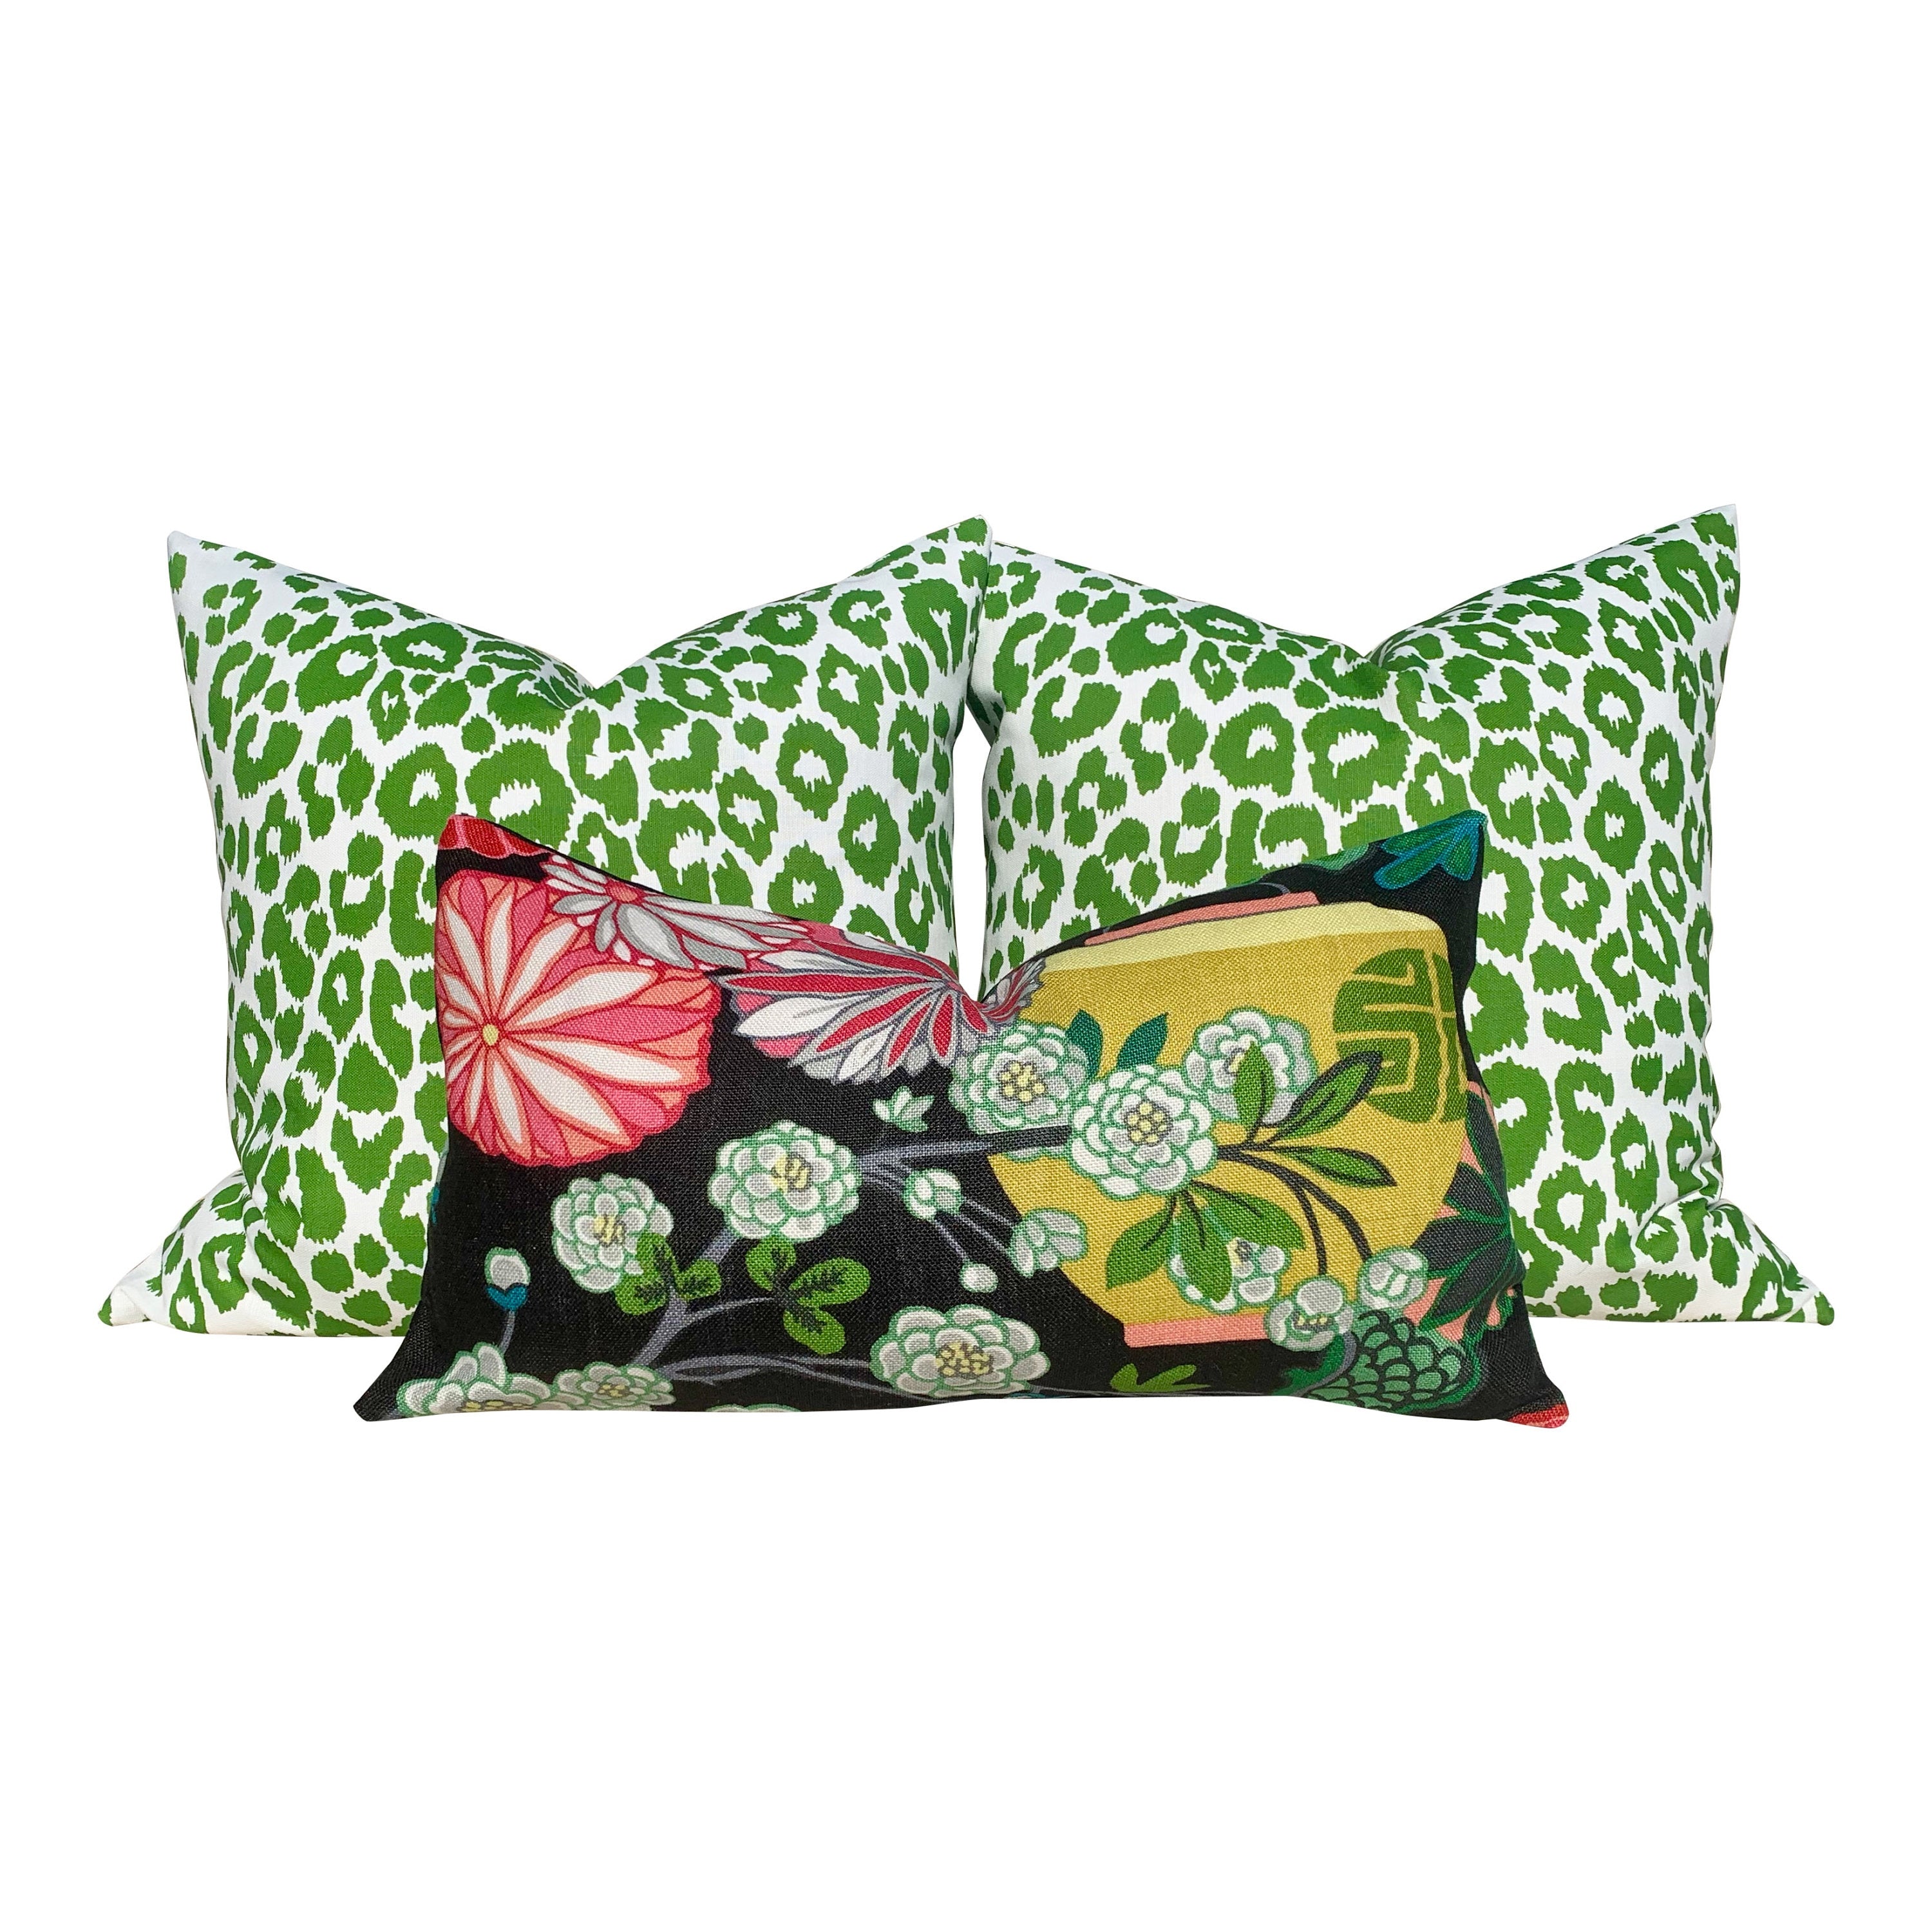 Chang Mai Dragon LInen Pillow in Ebony. Black, Pink Lumbar Pillow Cover, Chinoiserie Pillow, Green Black Floral pillow, Euro Sham Pillow